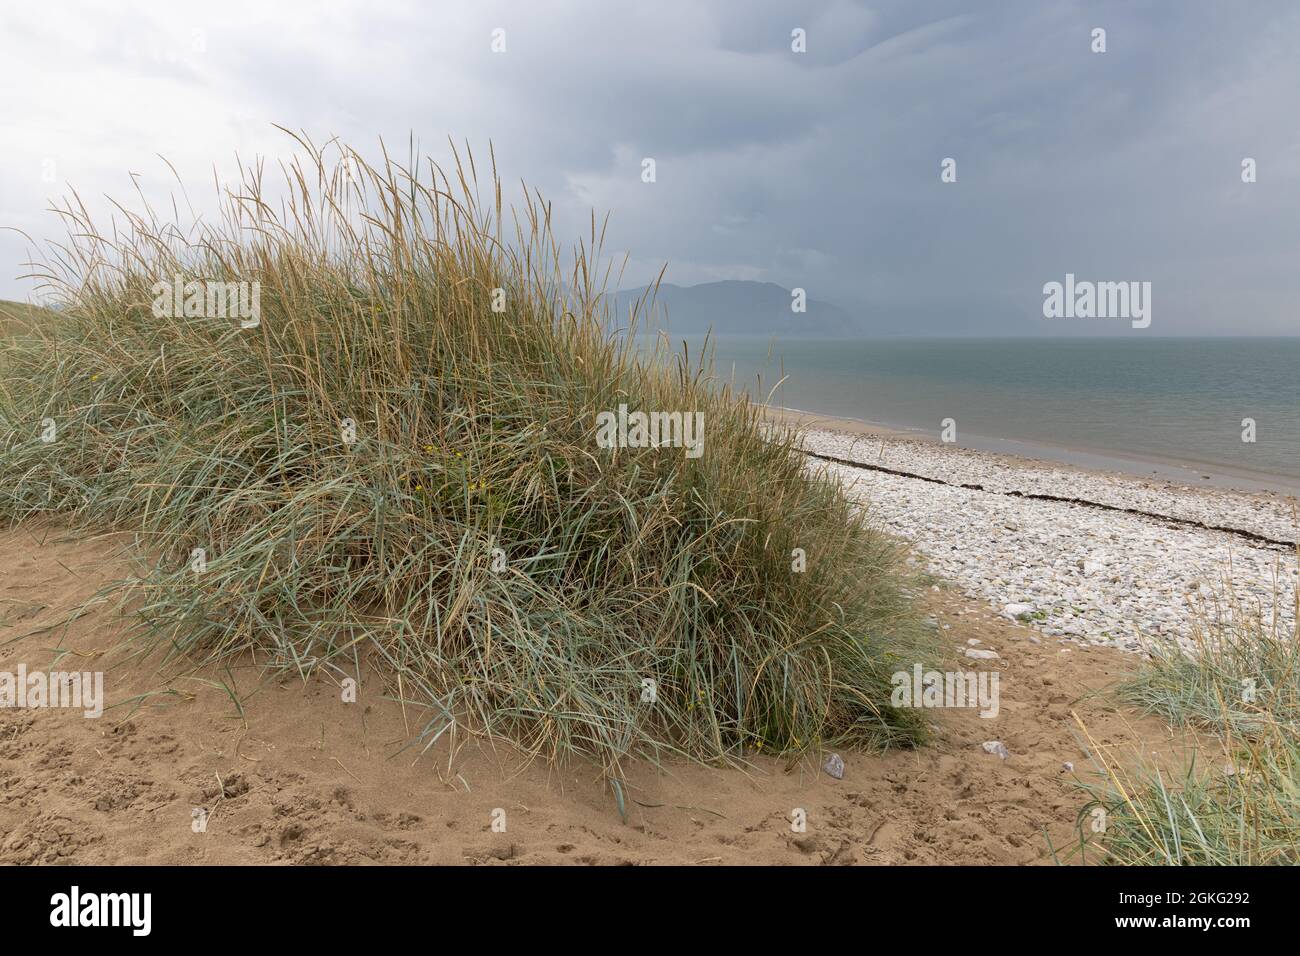 Llandudno, Conwy, UK, September 9th 2021: Under a threatening sky long grass grows on a sand dune by the shingle beach of West Shore, Llandudno. Stock Photo